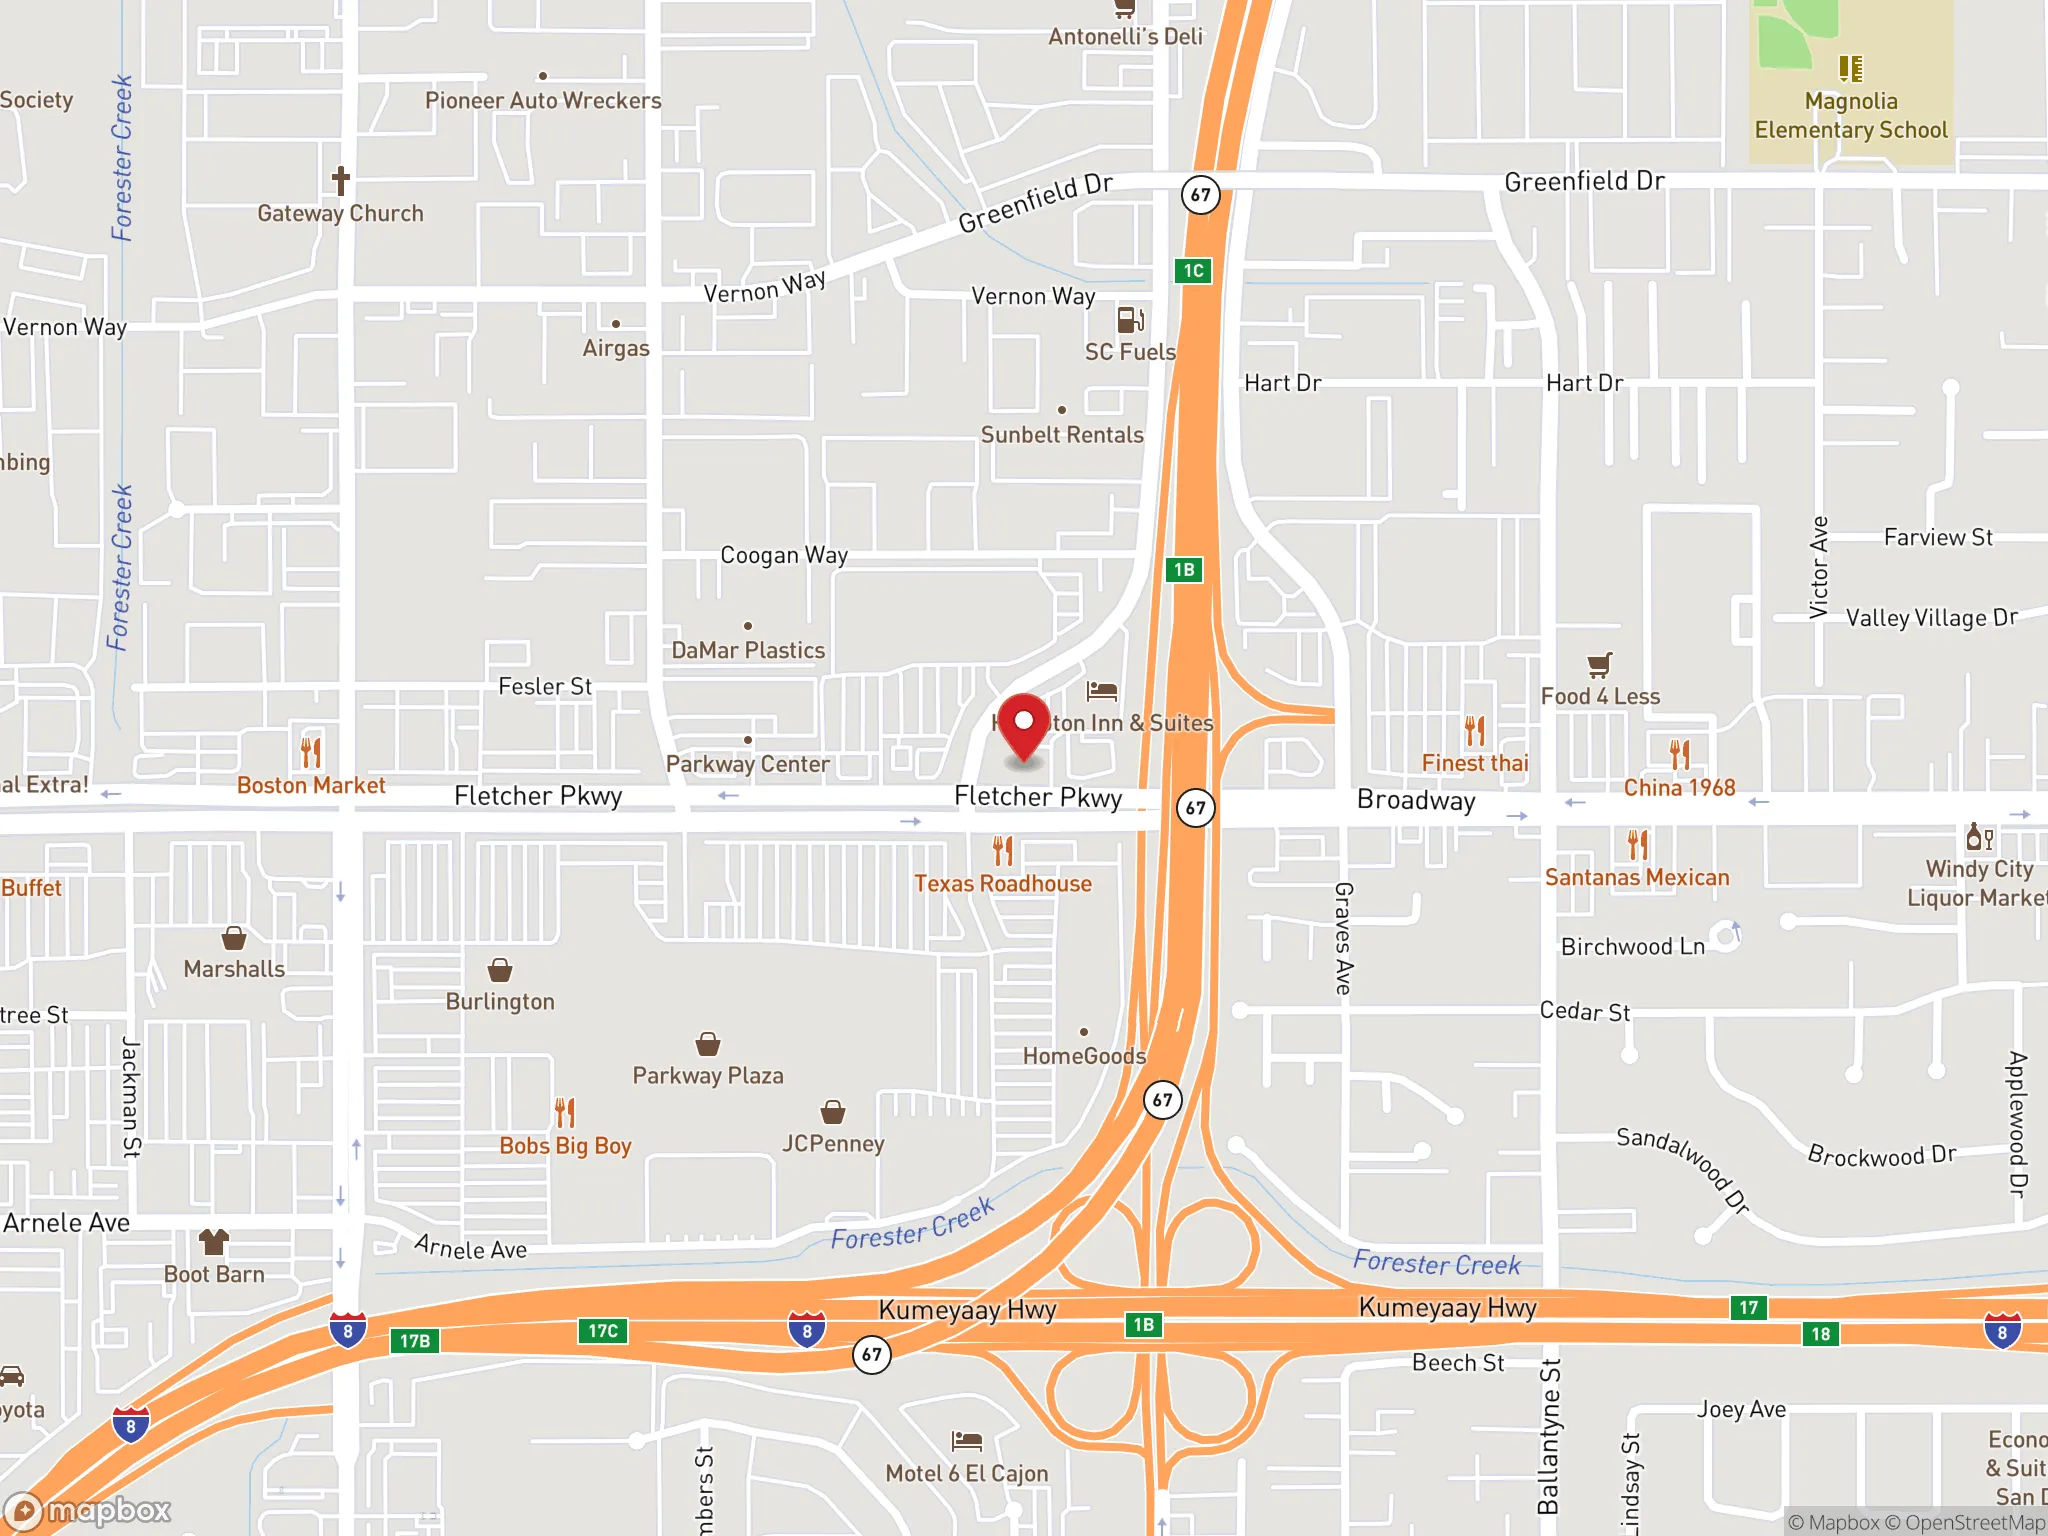 Map showing location of Dave's Hot Chicken restaurant in El Cajon, California.